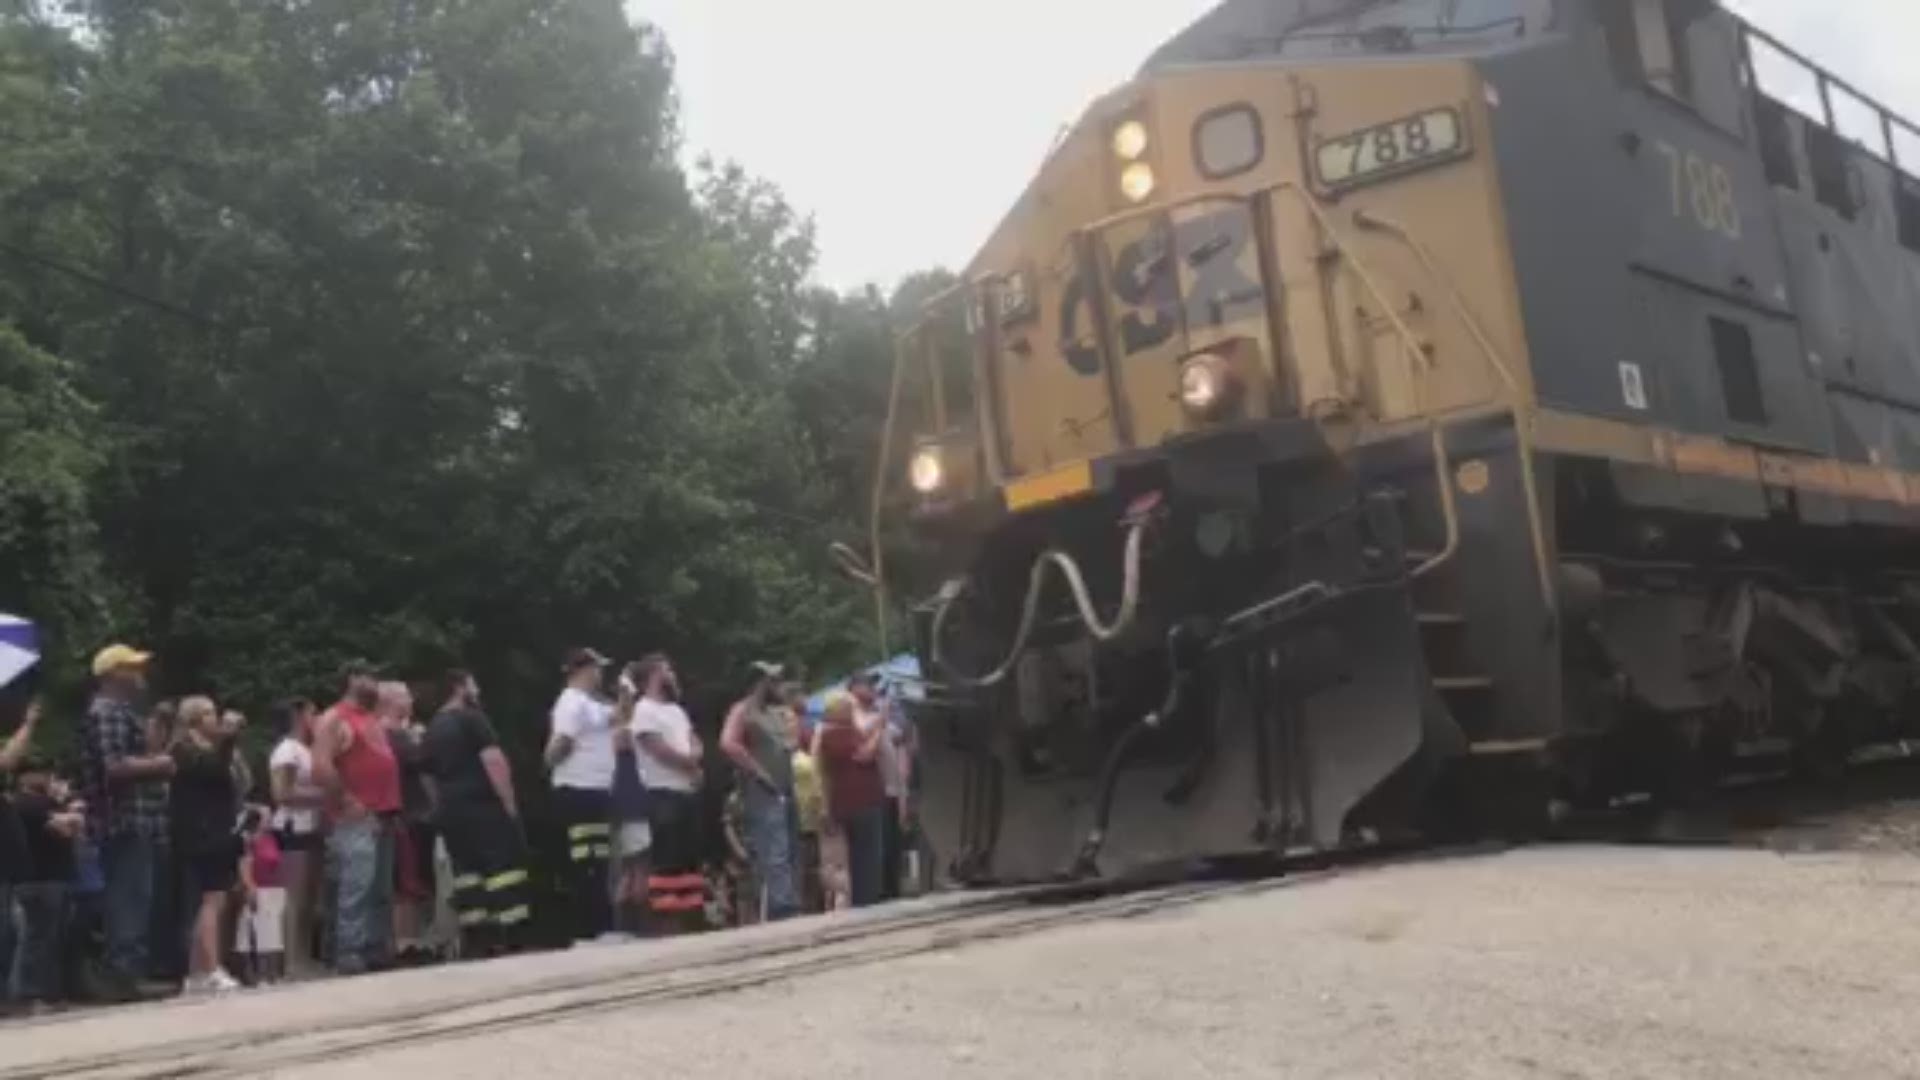 The train company left the cars full of coal.